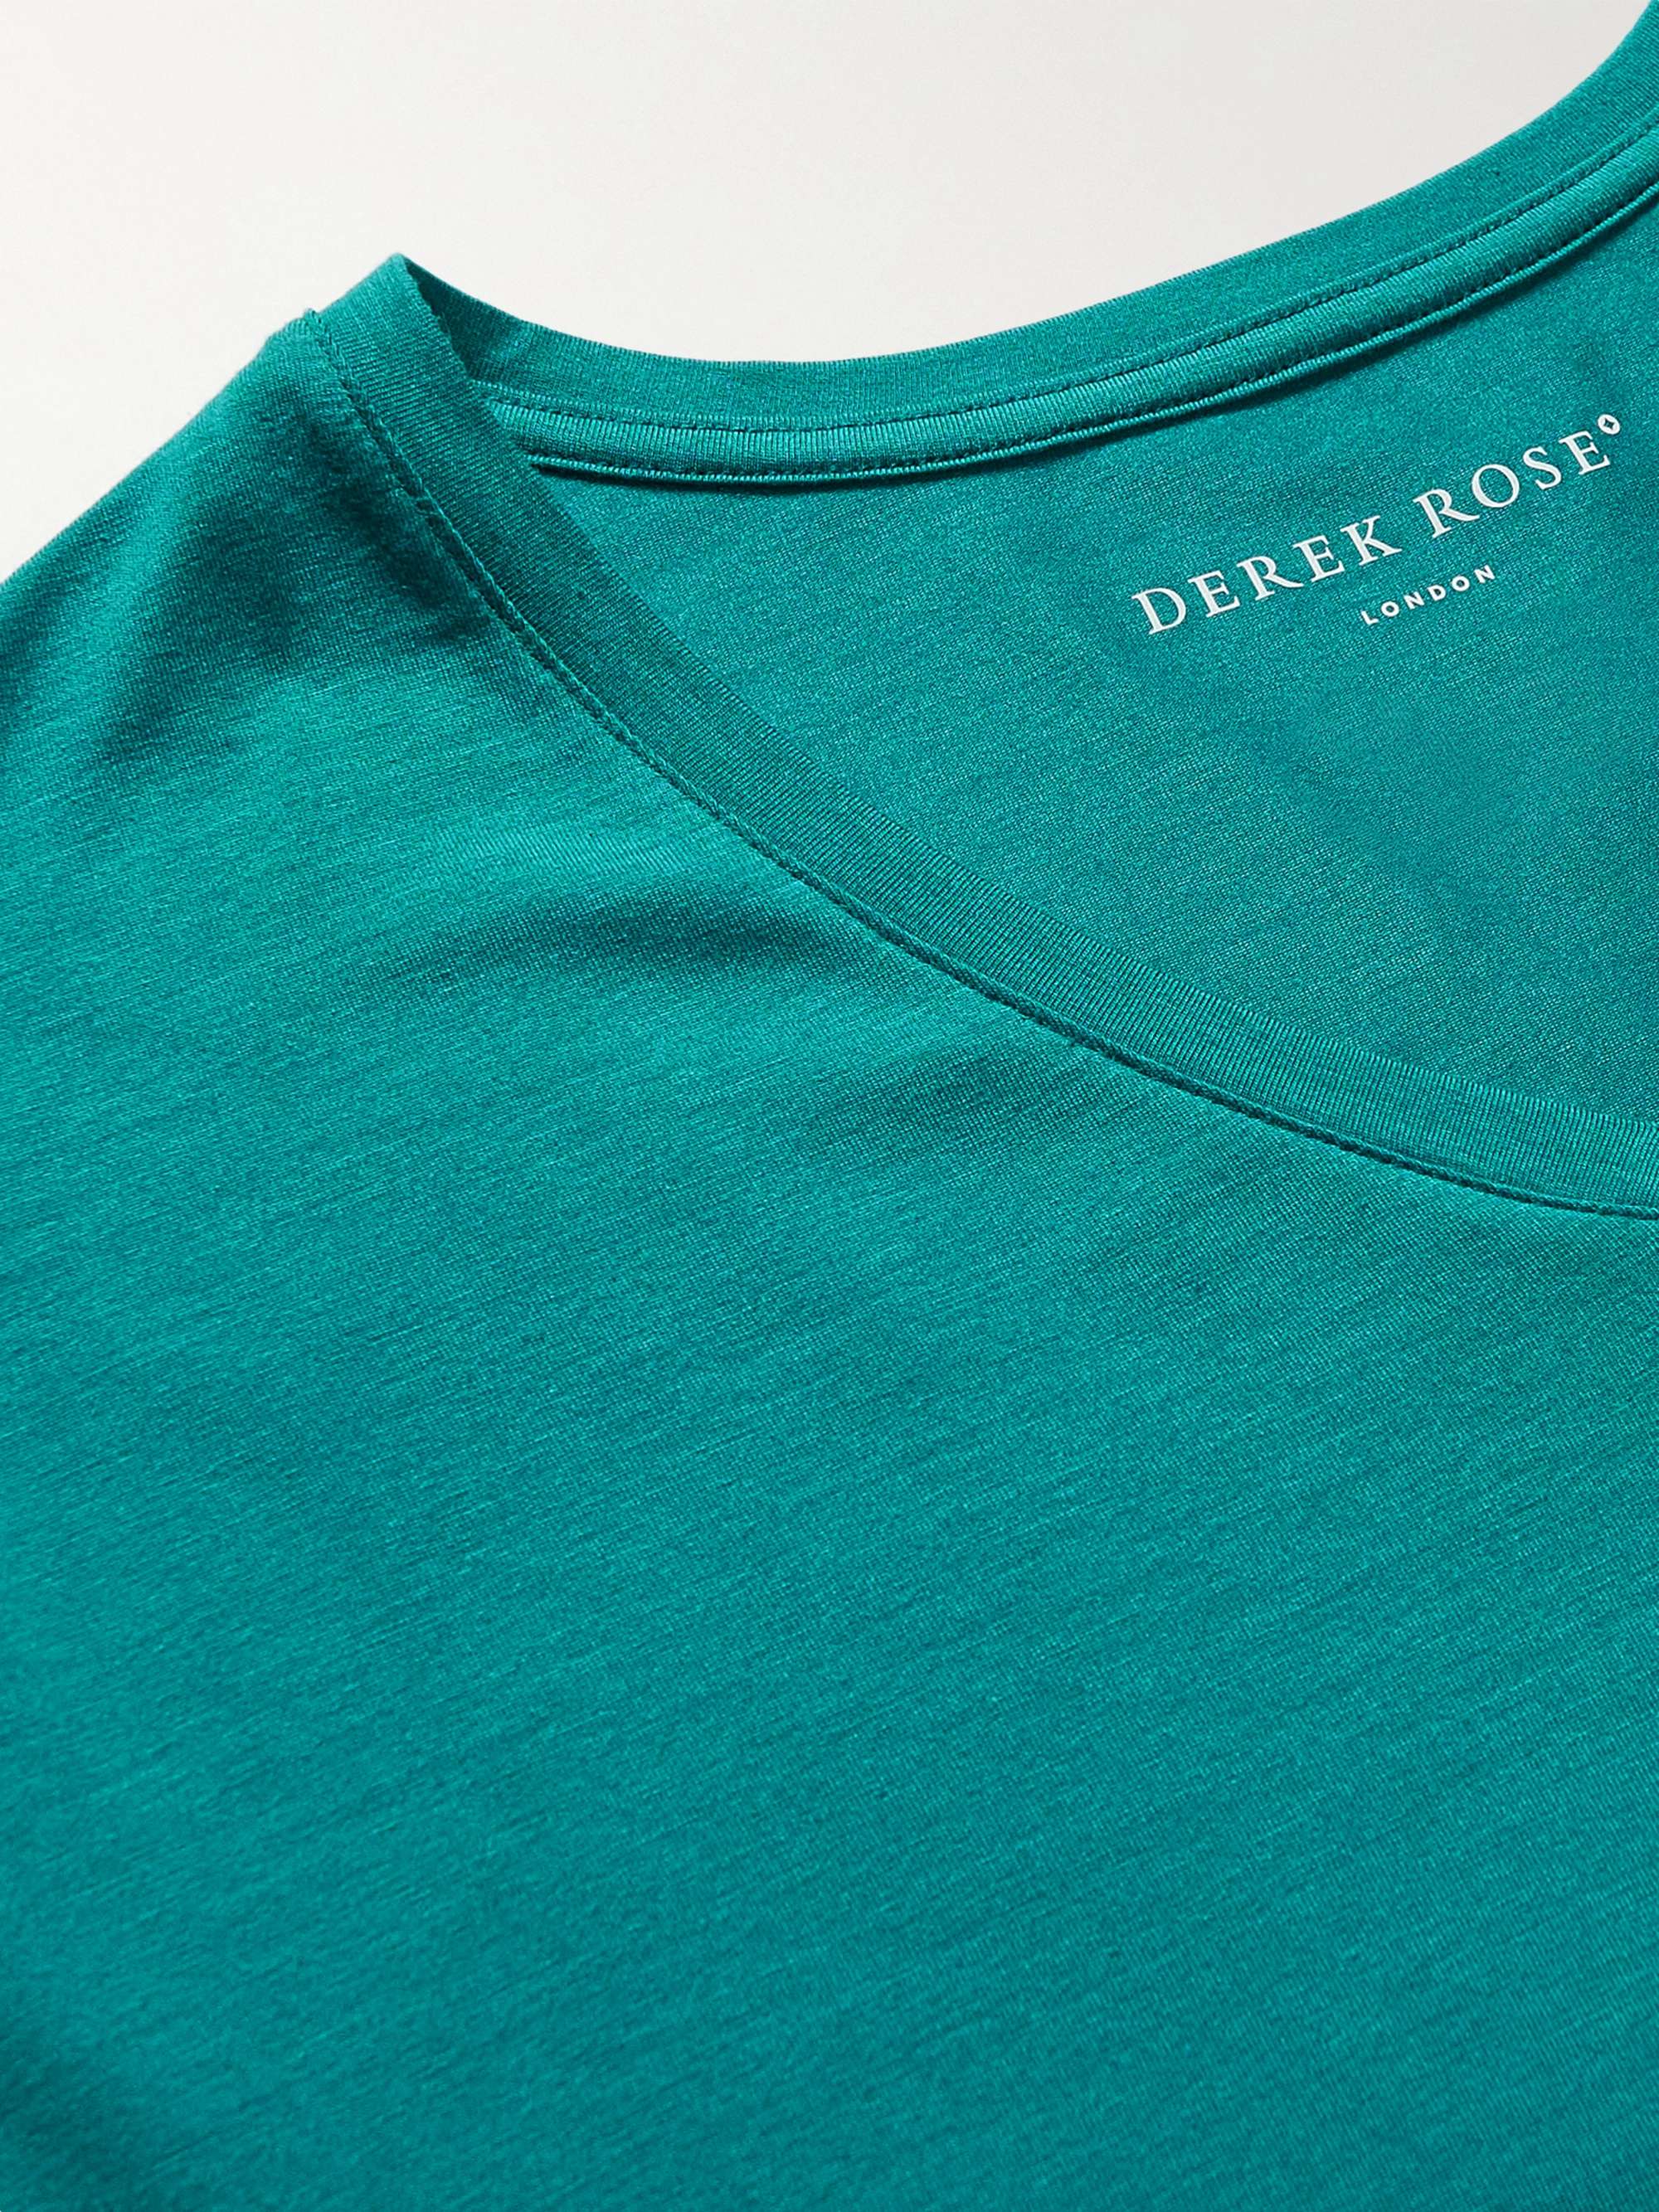 DEREK ROSE Basel Stretch Micro Modal T-Shirt